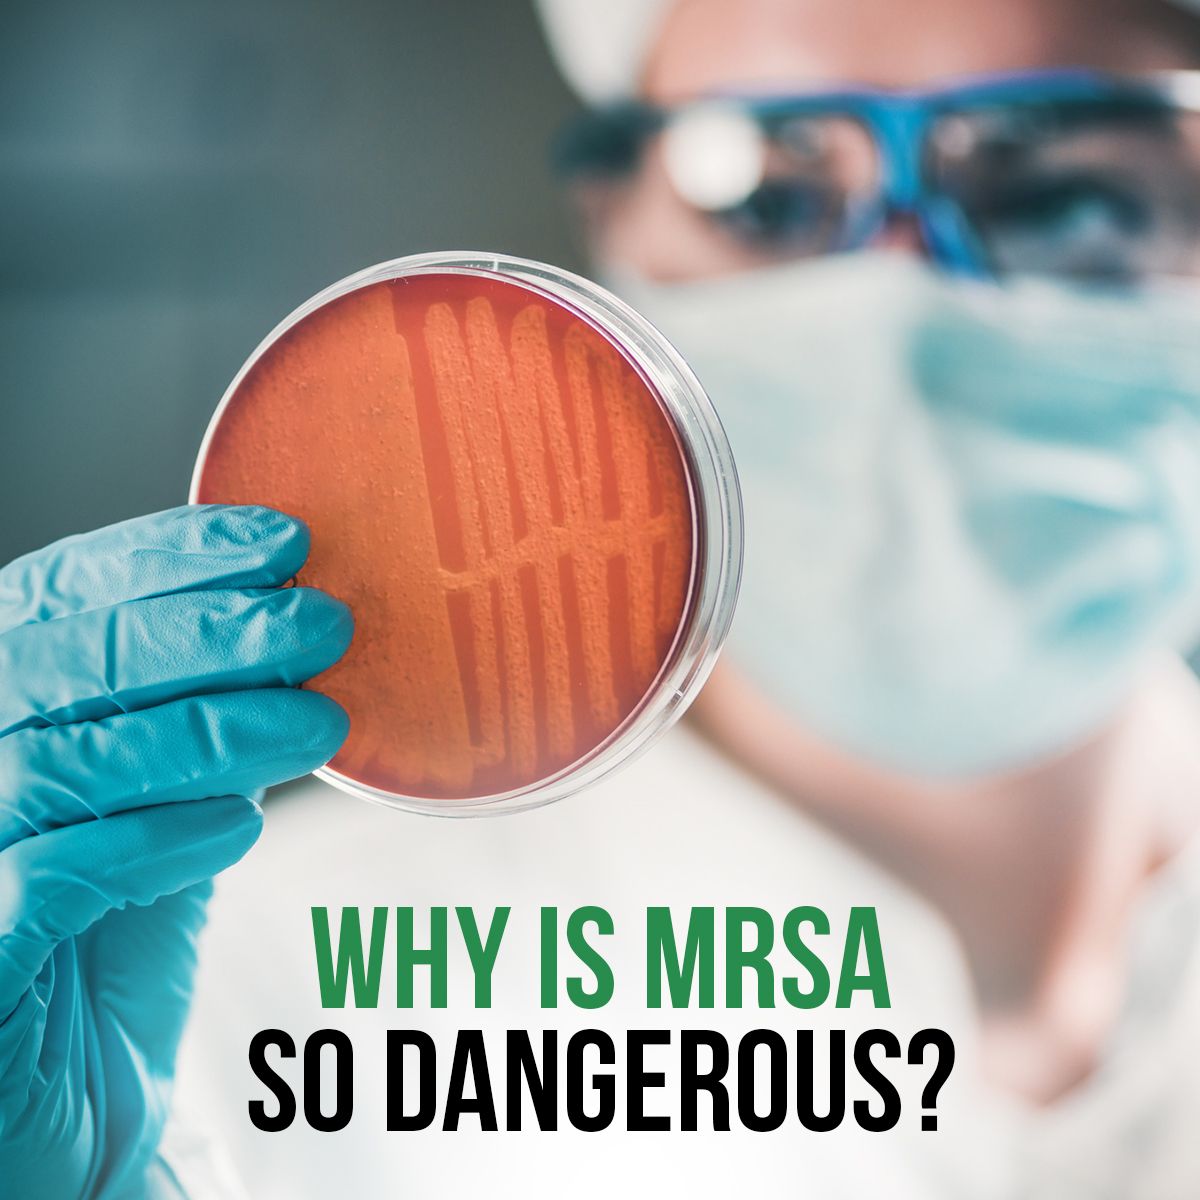 WHY IS MRSA SO DANGEROUS?